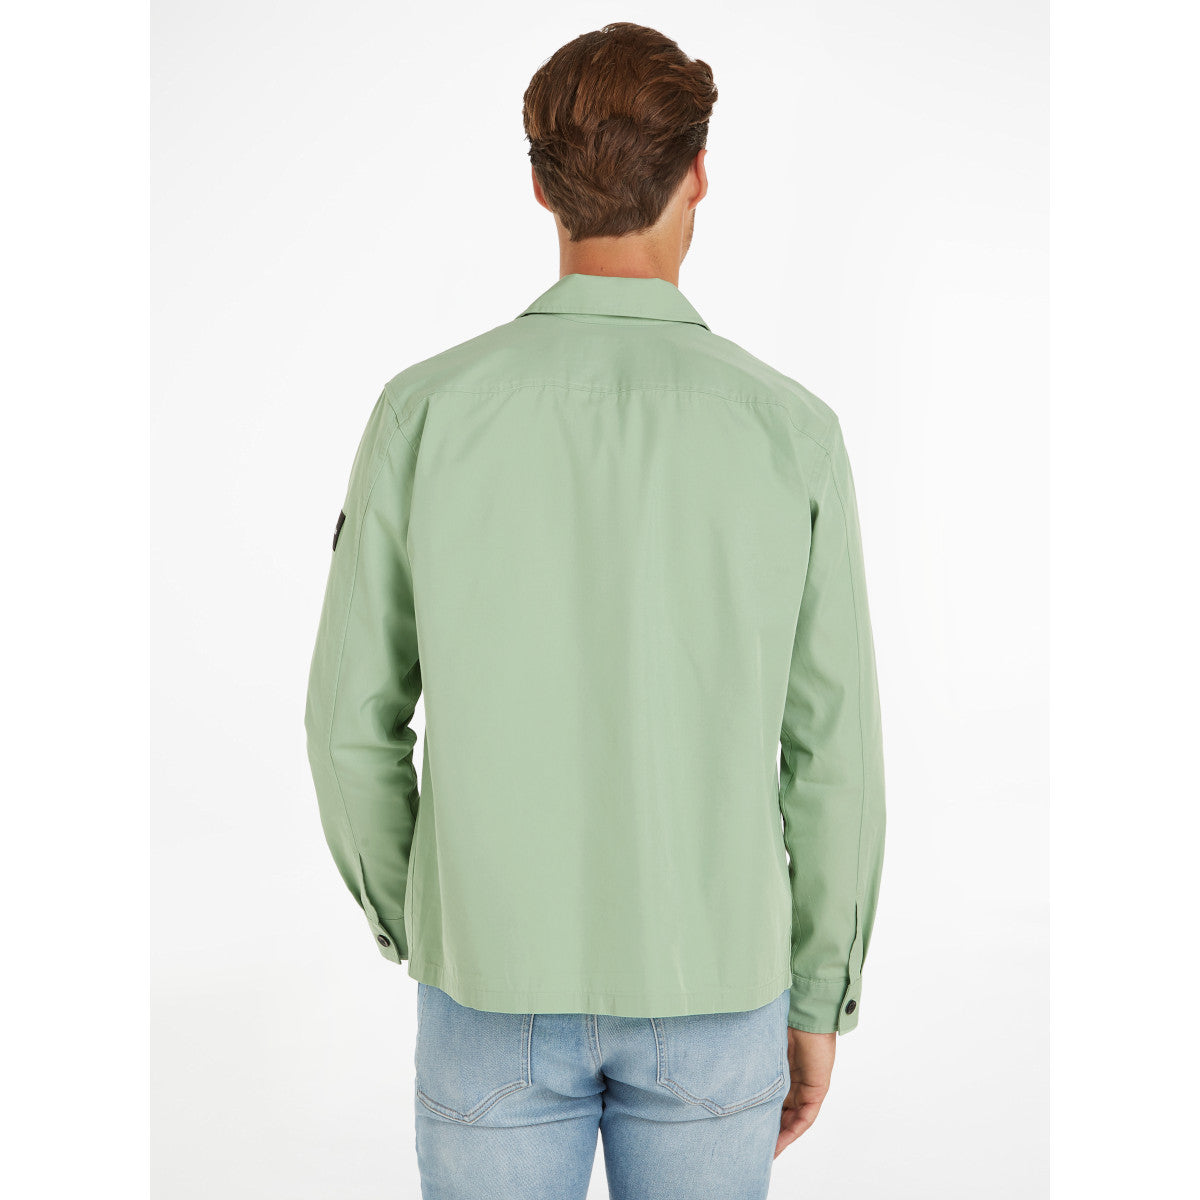 Calvin Klein Cotton Nylon Overshirt LJ4 Quiet Green